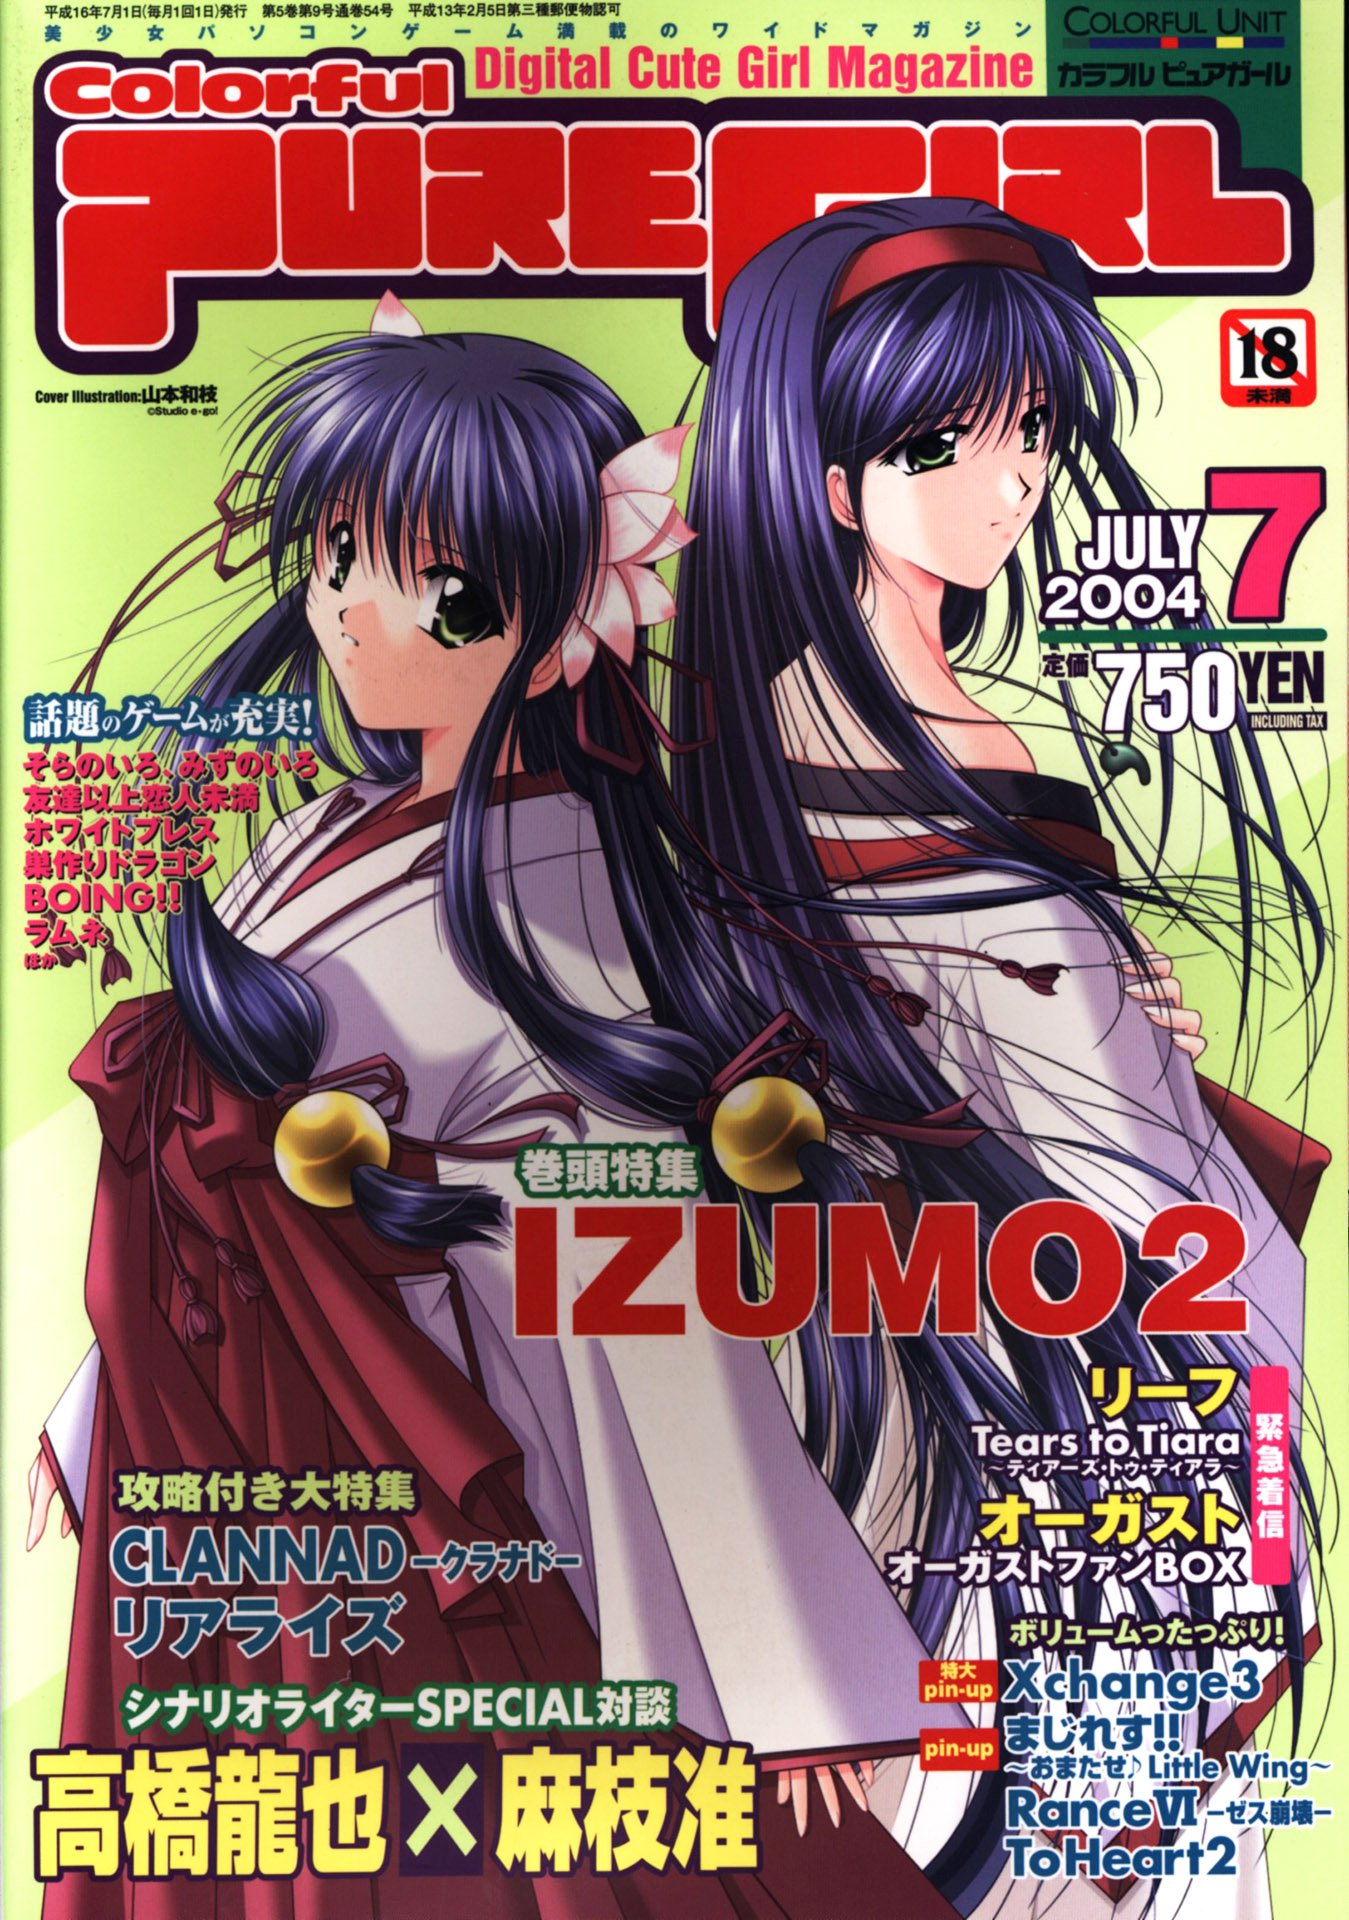 Colorful Puregirl Issue 54 (July 2004)